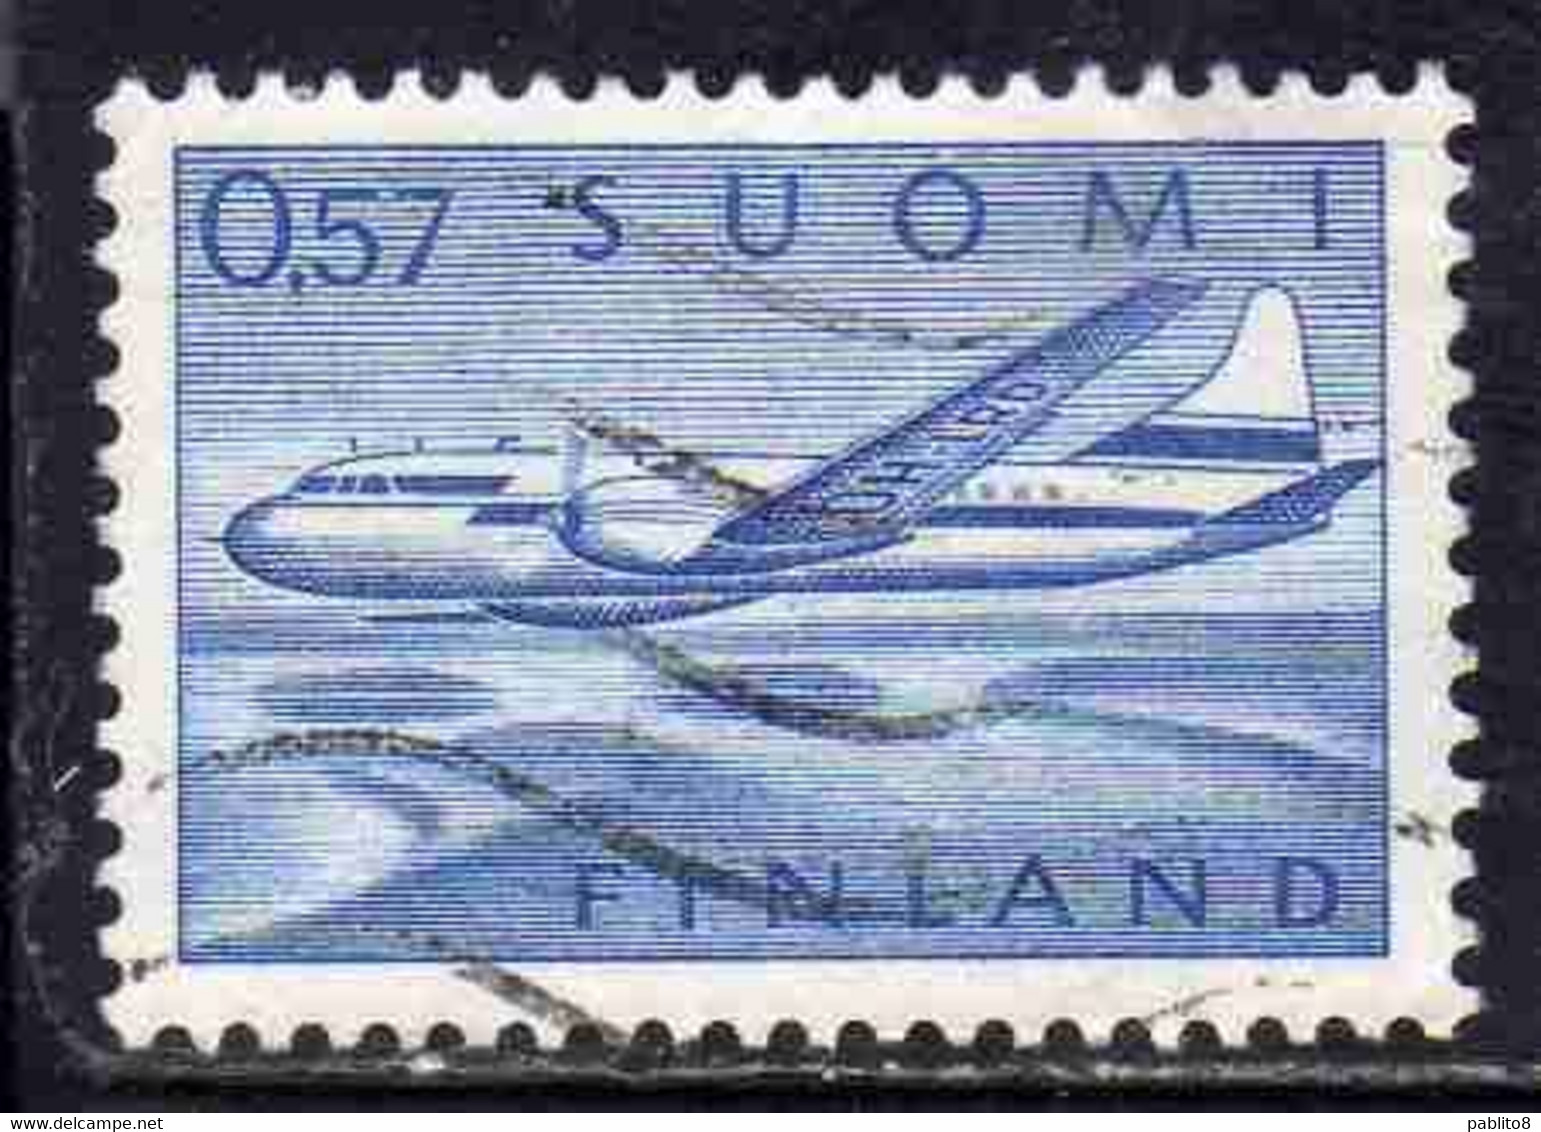 SUOMI FINLAND FINLANDIA FINLANDE 1970 AIR POST MAIL AIRMAIL CONVAIR OVER LAKES 0.57m 57p USED USATO OBLITERE' - Gebraucht